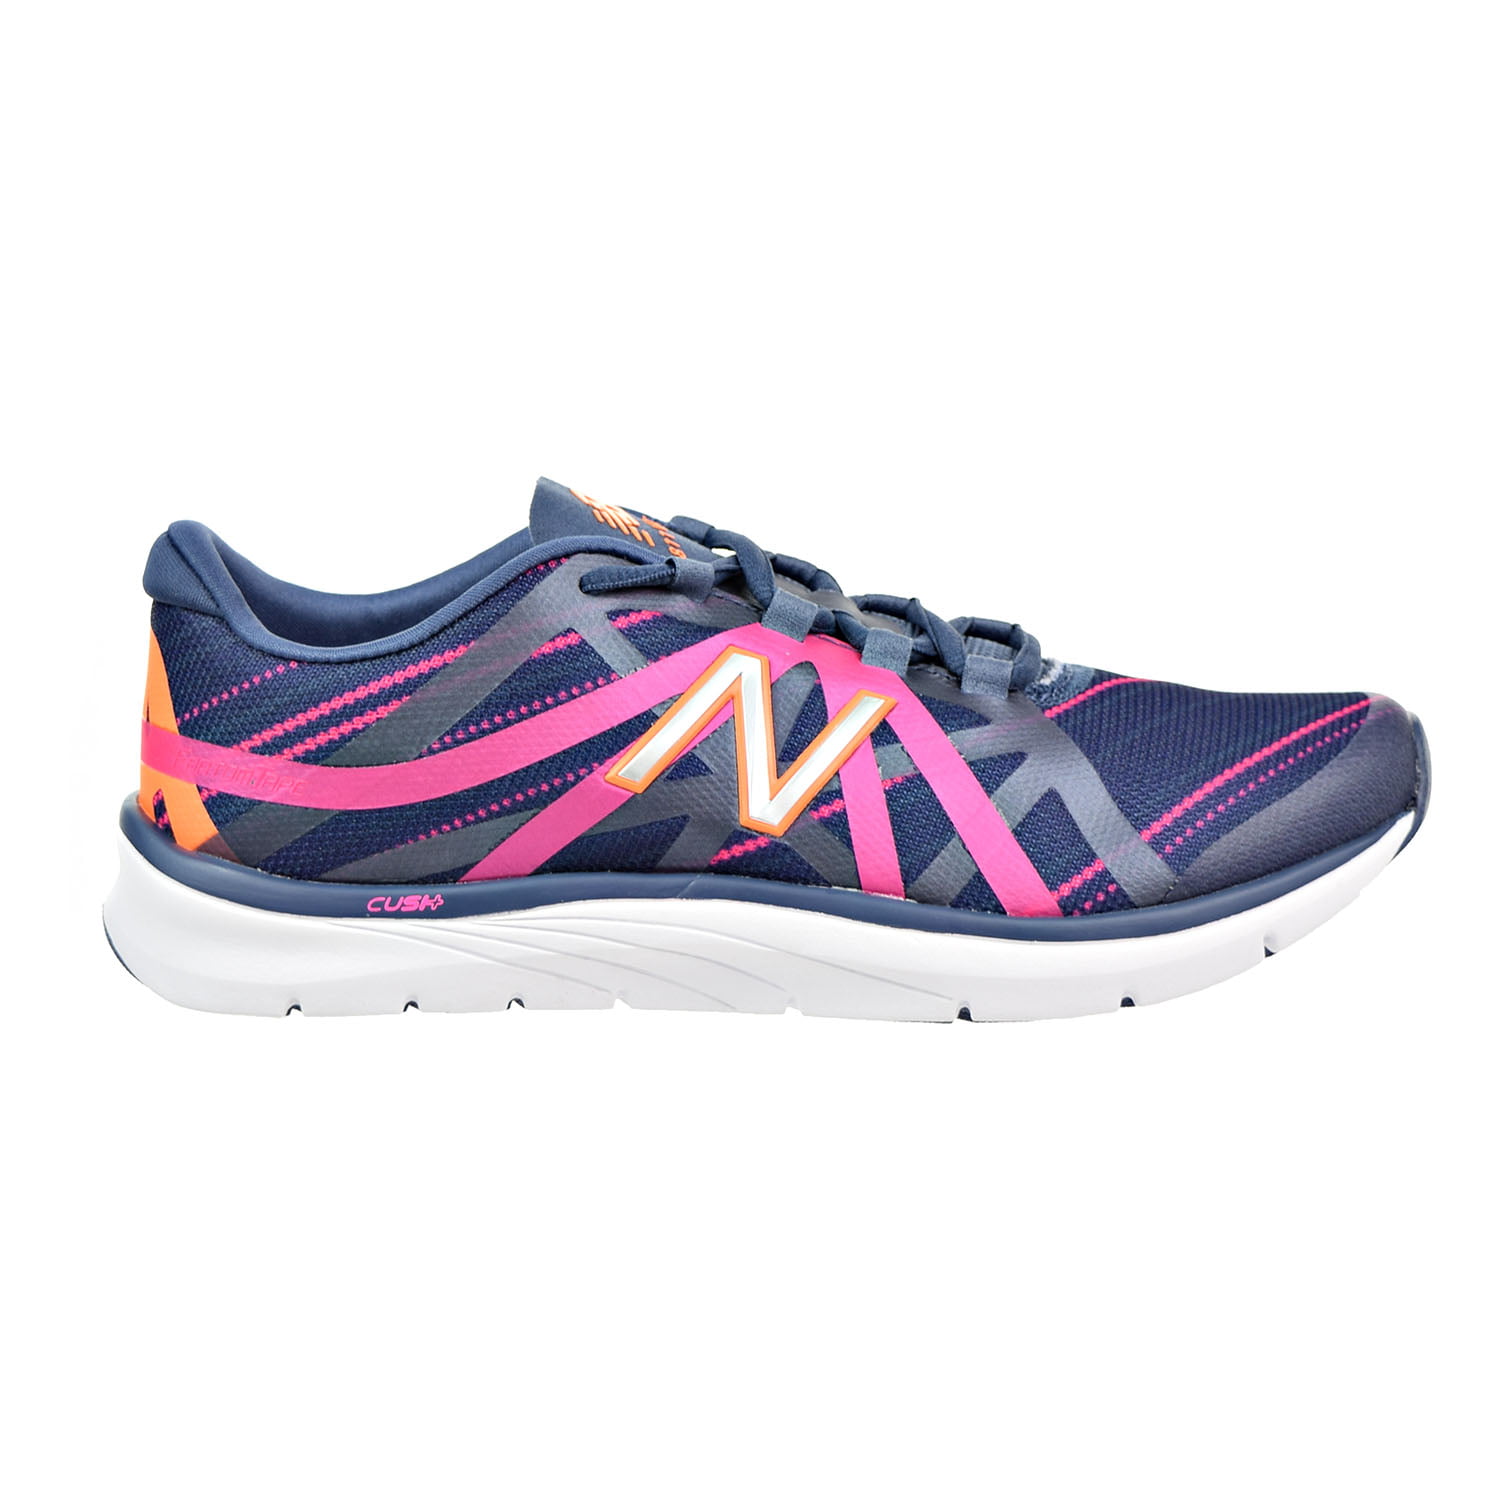 New Balance Graphic Trainer Women's Shoes wx811-gg2 - Walmart.com